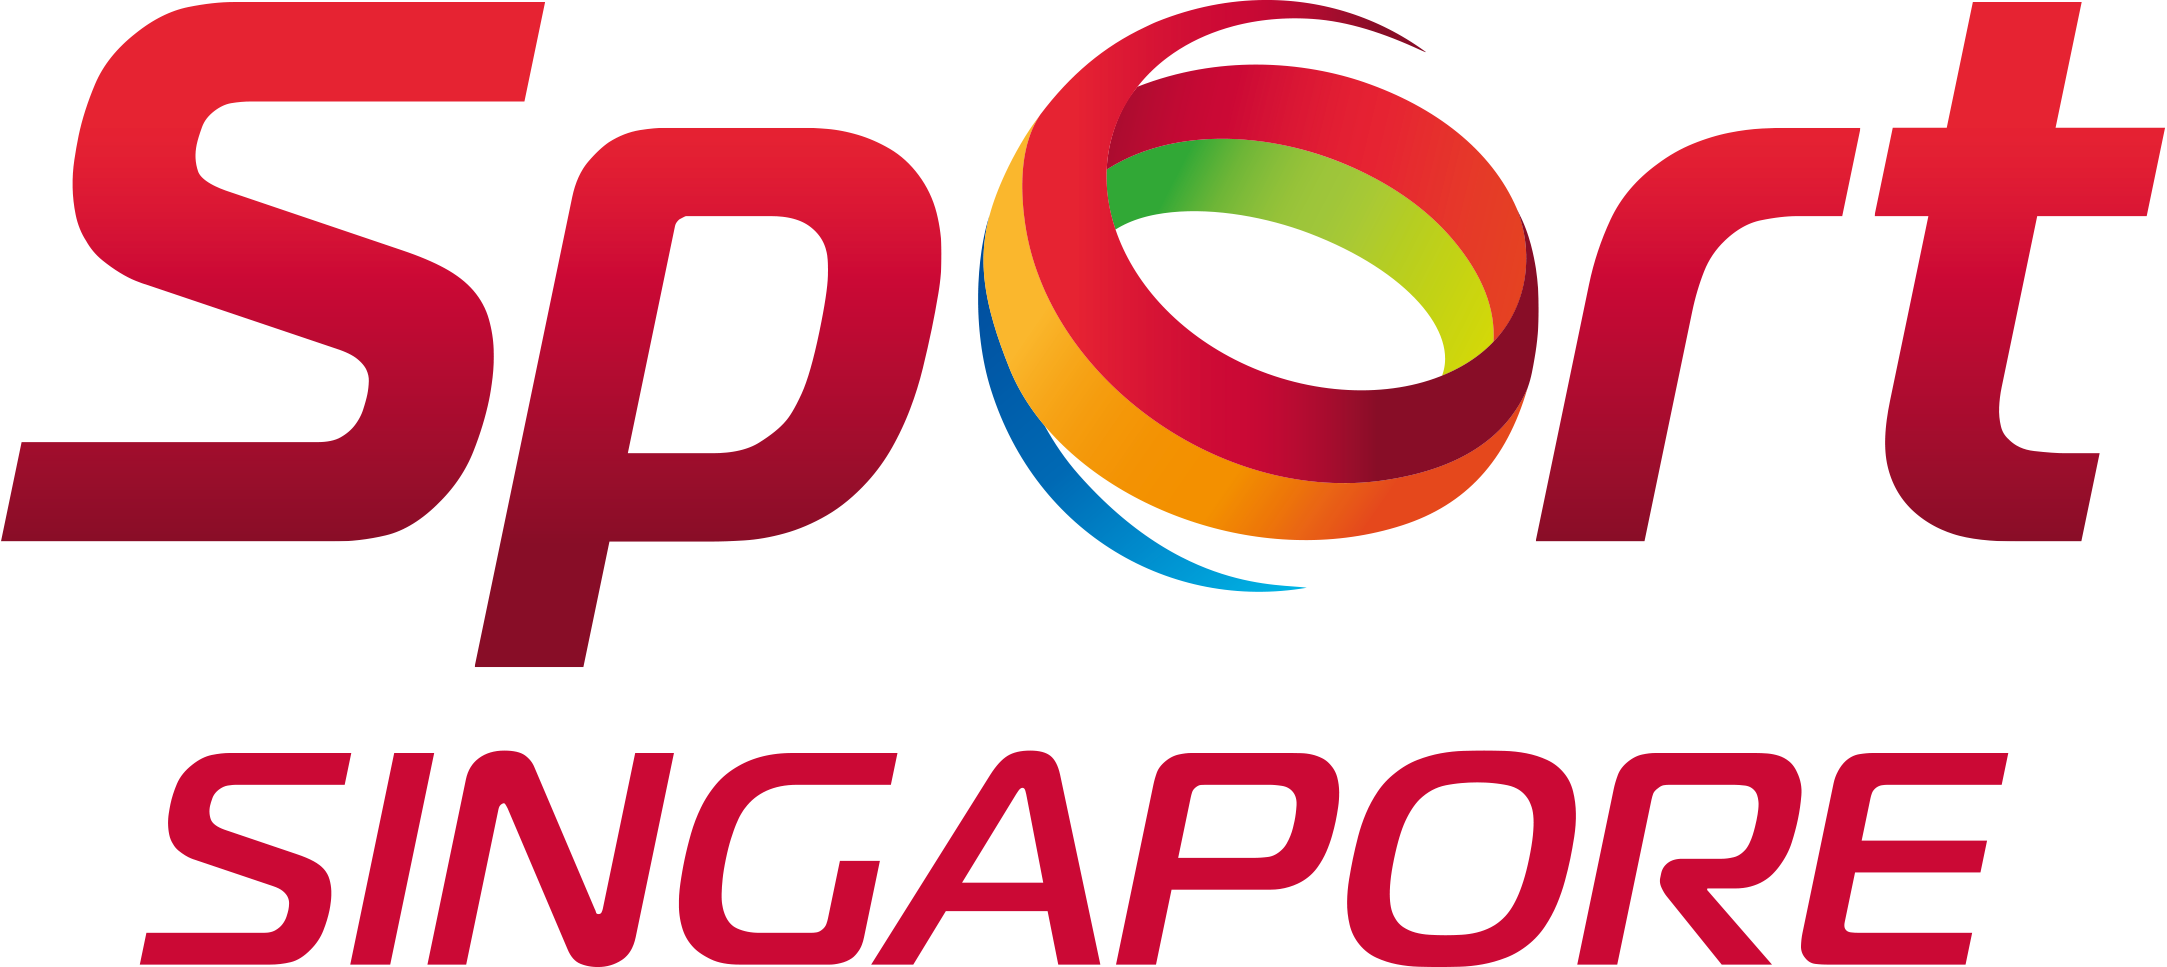 SportSG_Logo_Full_Colour_RGB (1) (1).png